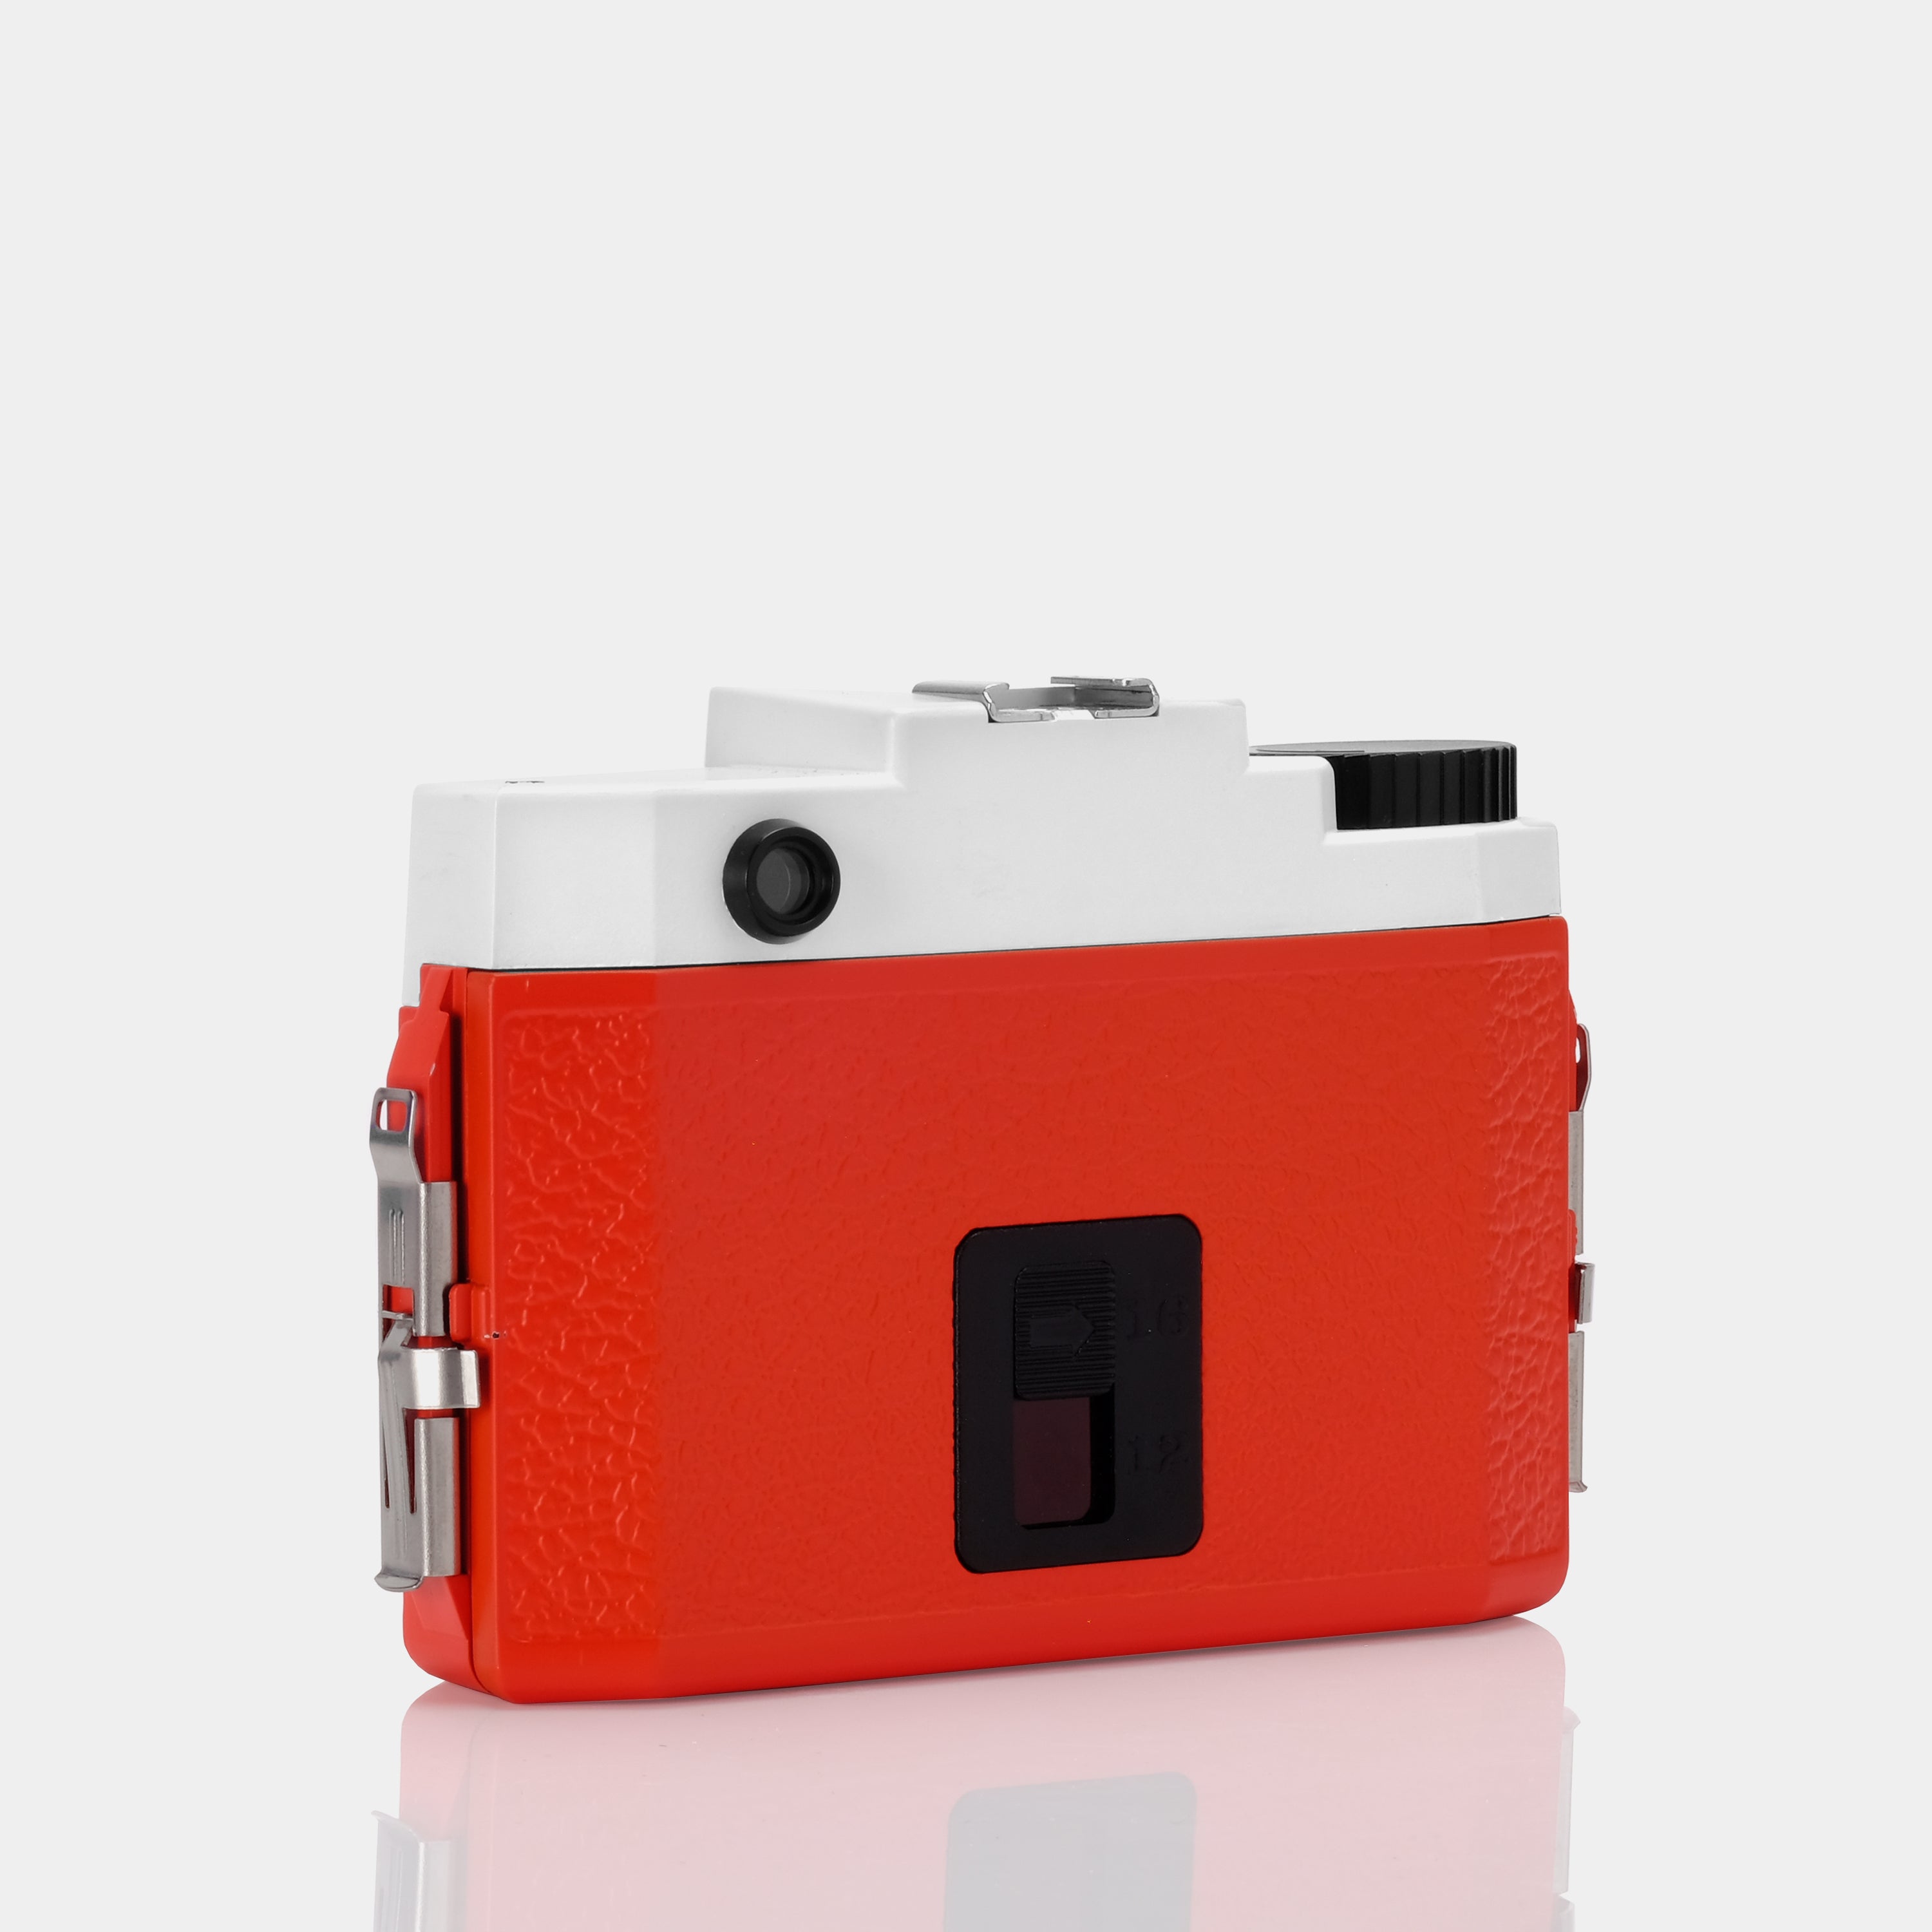 Holga 120N White and Red 120 Film Camera